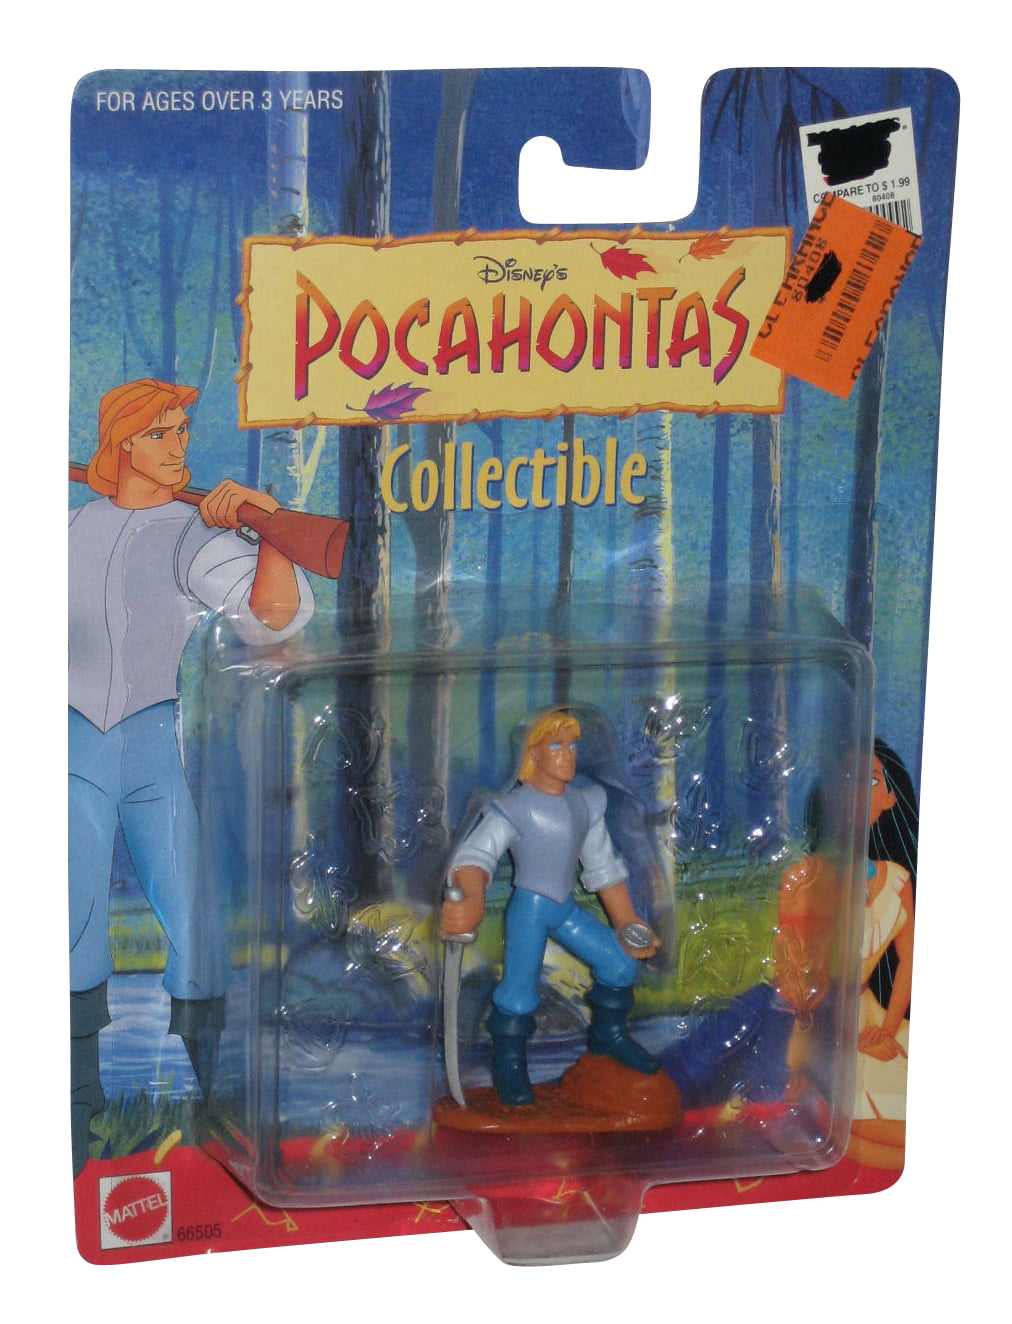 Pocahontas Figure Disneys Collectible Featuring Pocahontas Mattel 66505